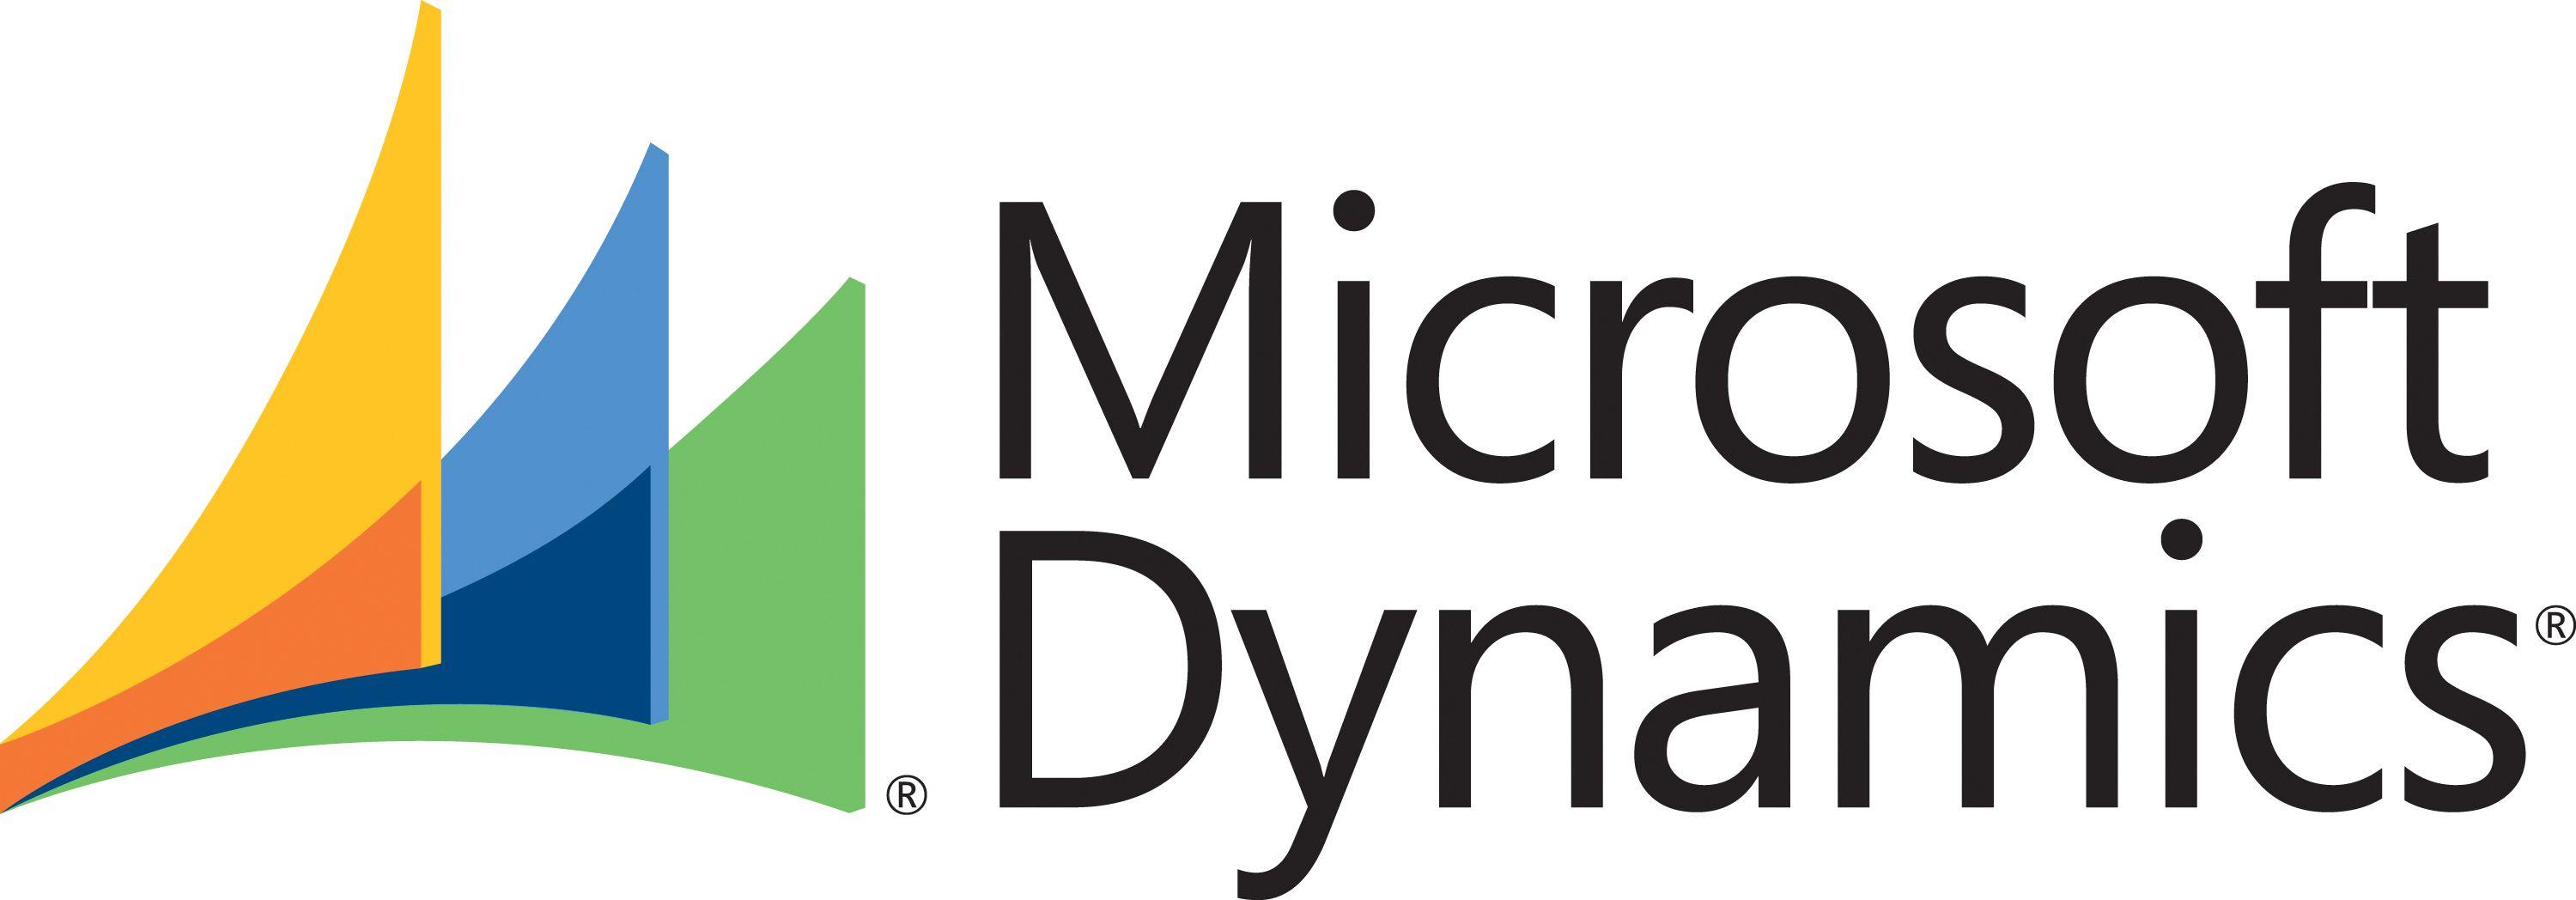 Microsoft Office 365 Dynamics Logo - Dynamics 365 – Glympse